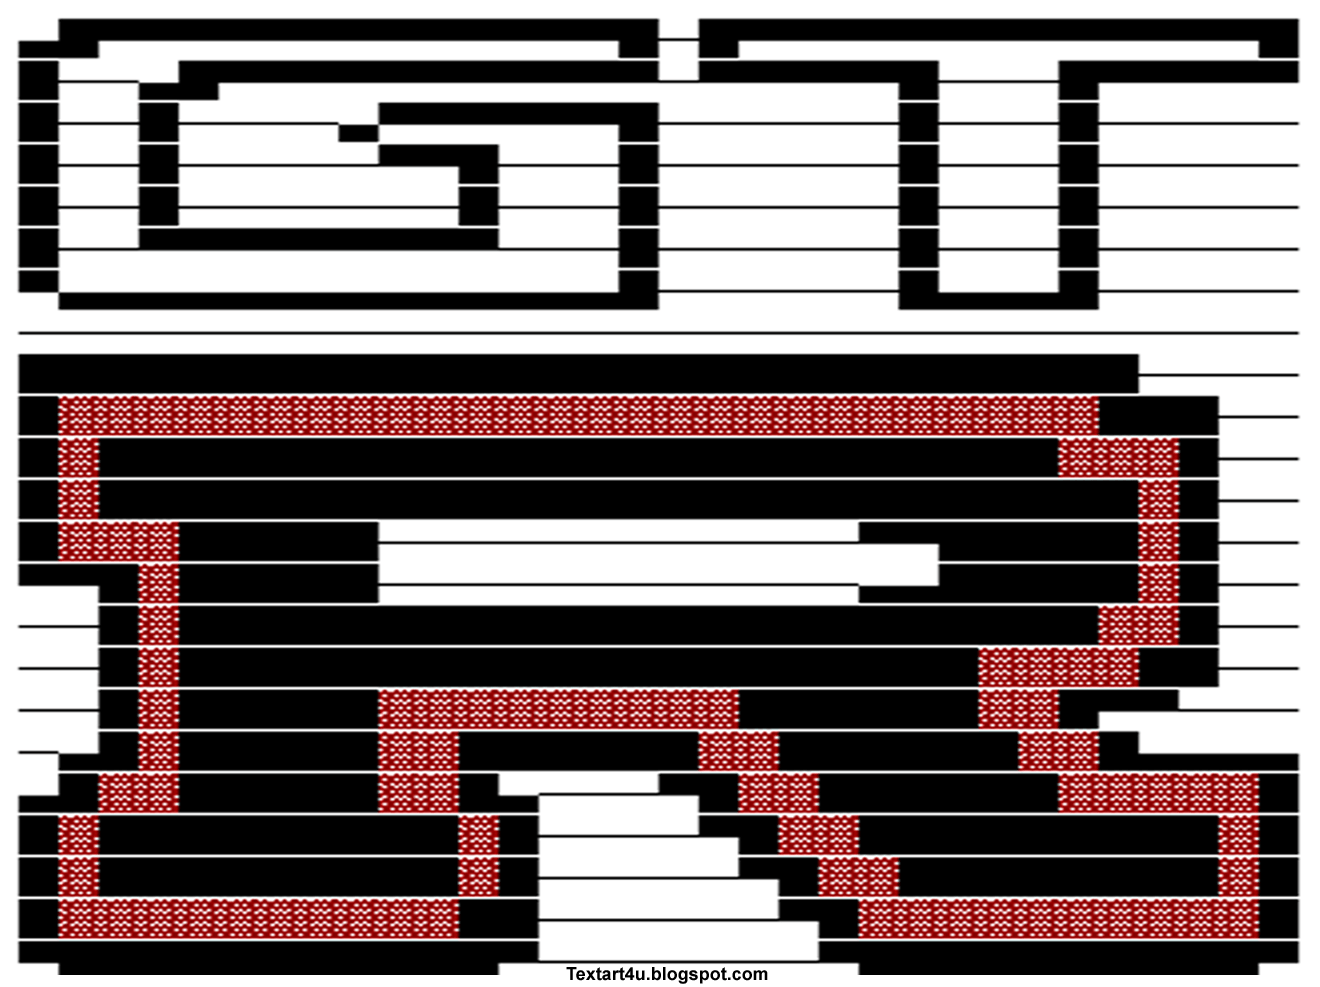 Cool GTR Logo - Nissan Skyline GT R Logo ASCII Art. Cool ASCII Text Art 4 U